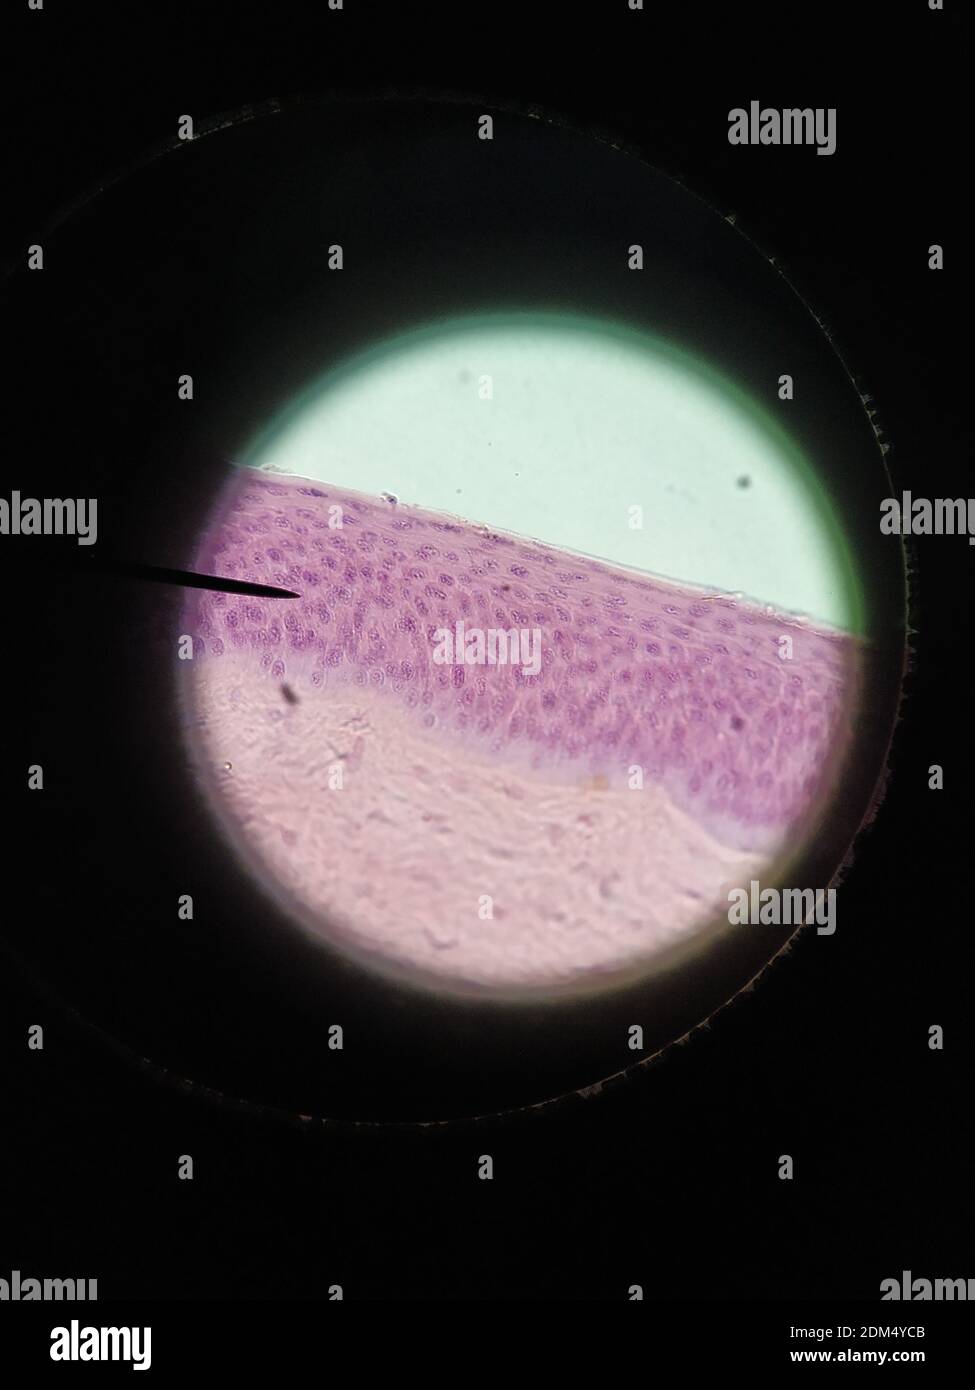 Piel humana microscopio optico fotografías e imágenes de alta resolución -  Alamy